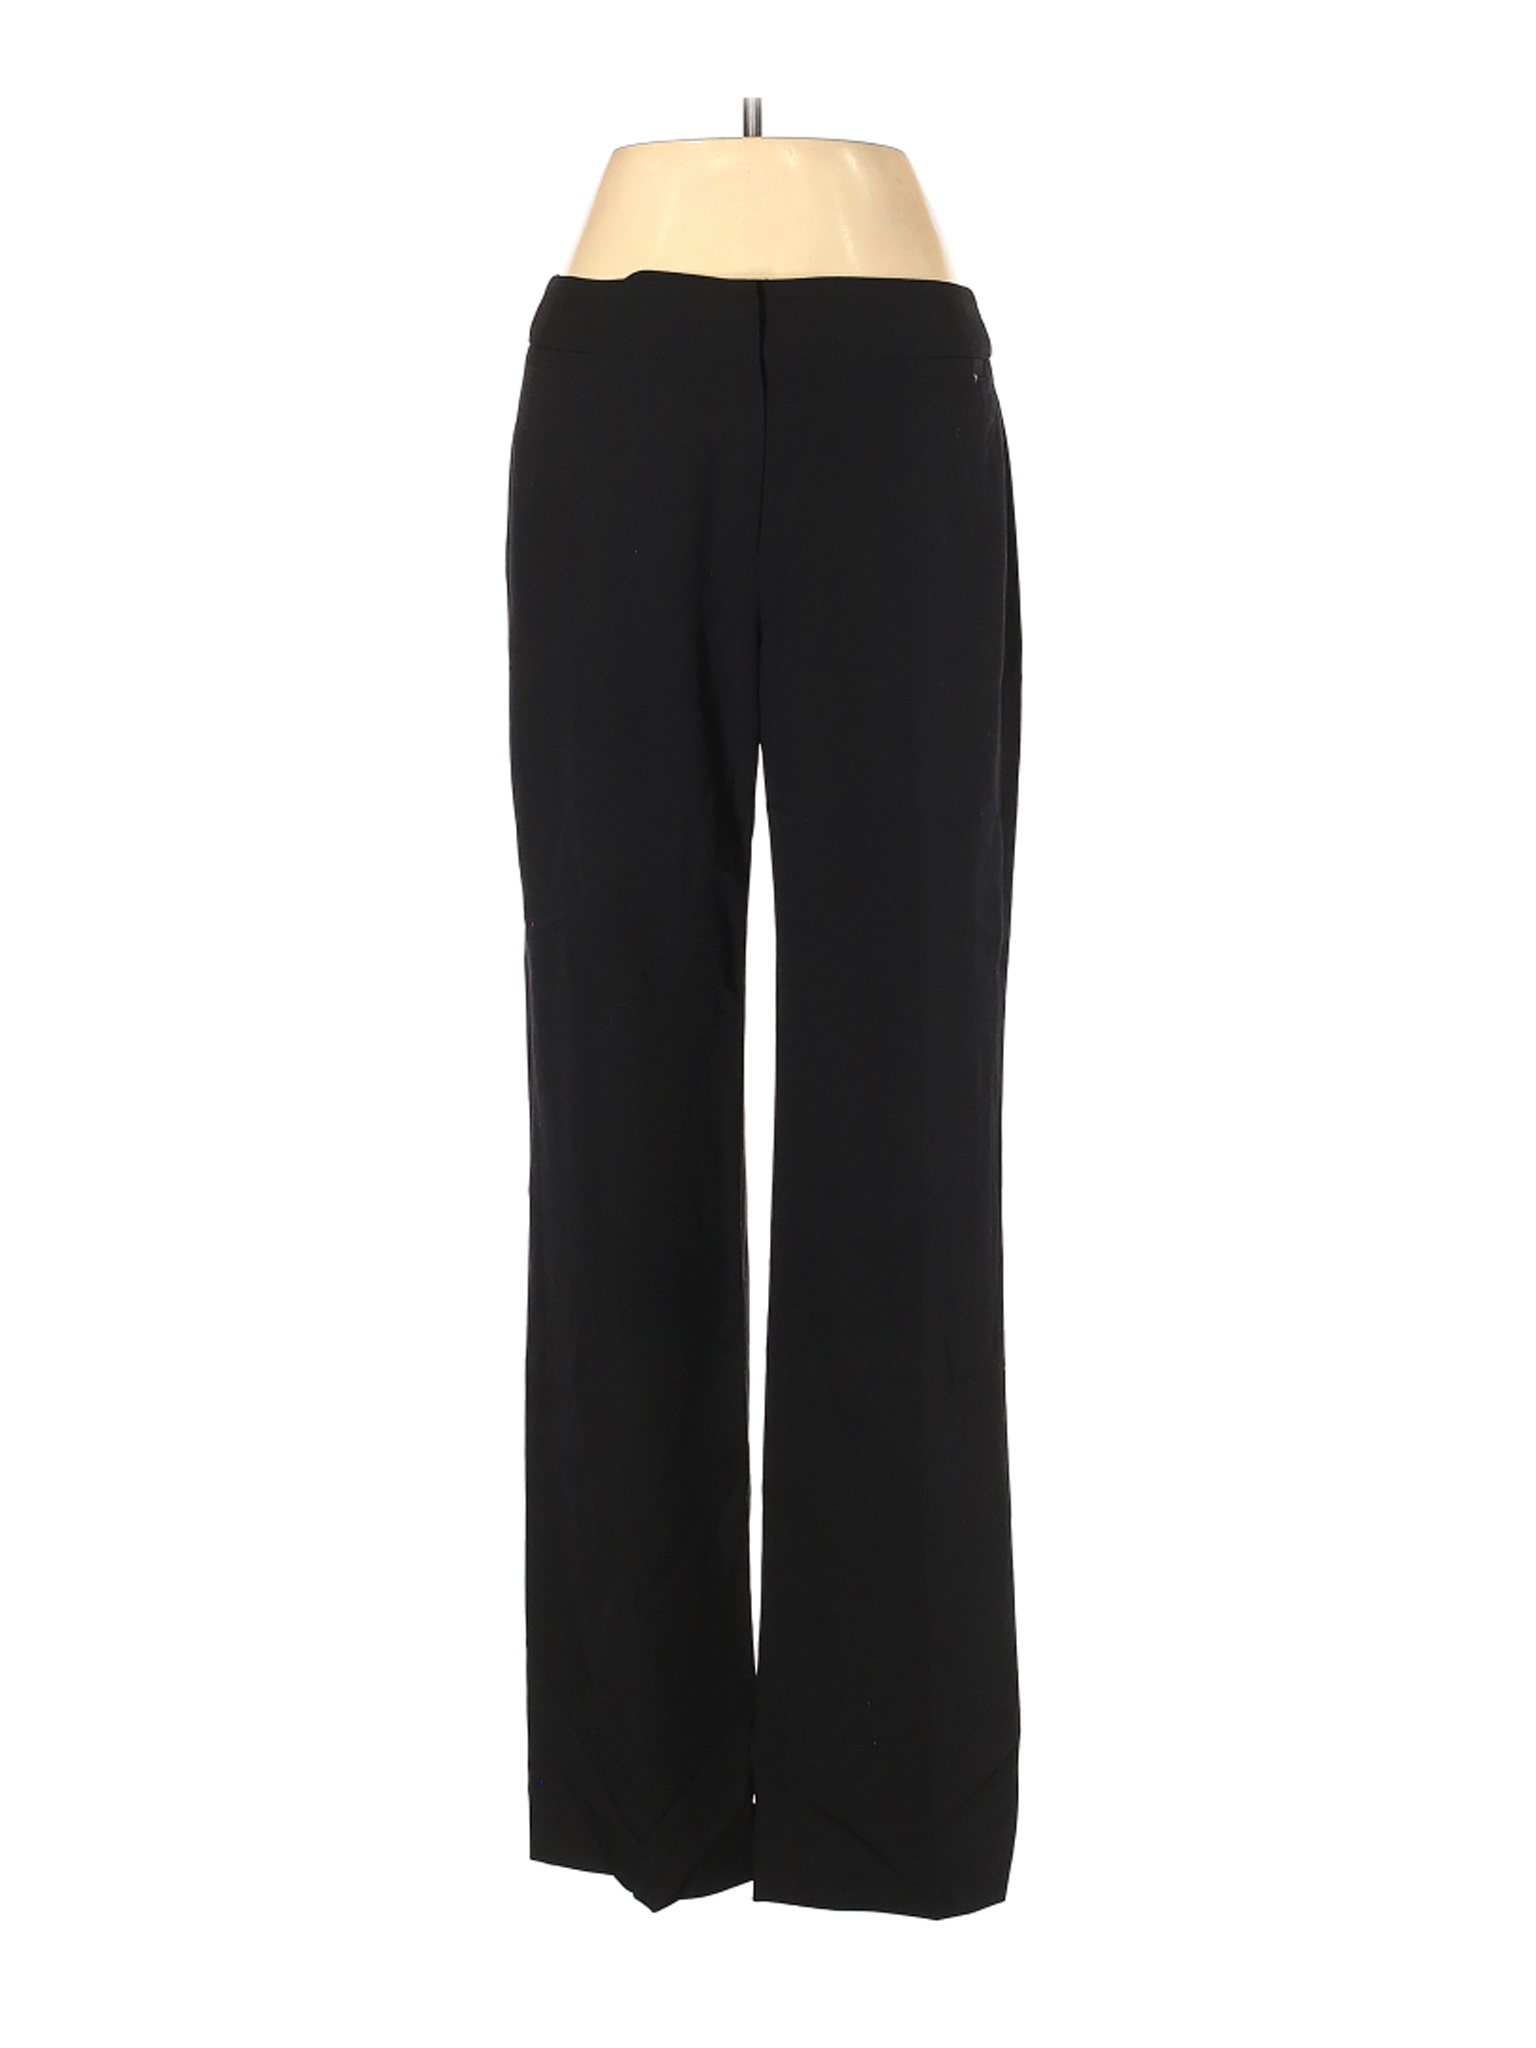 Liz Claiborne Women Black Dress Pants 4 | eBay